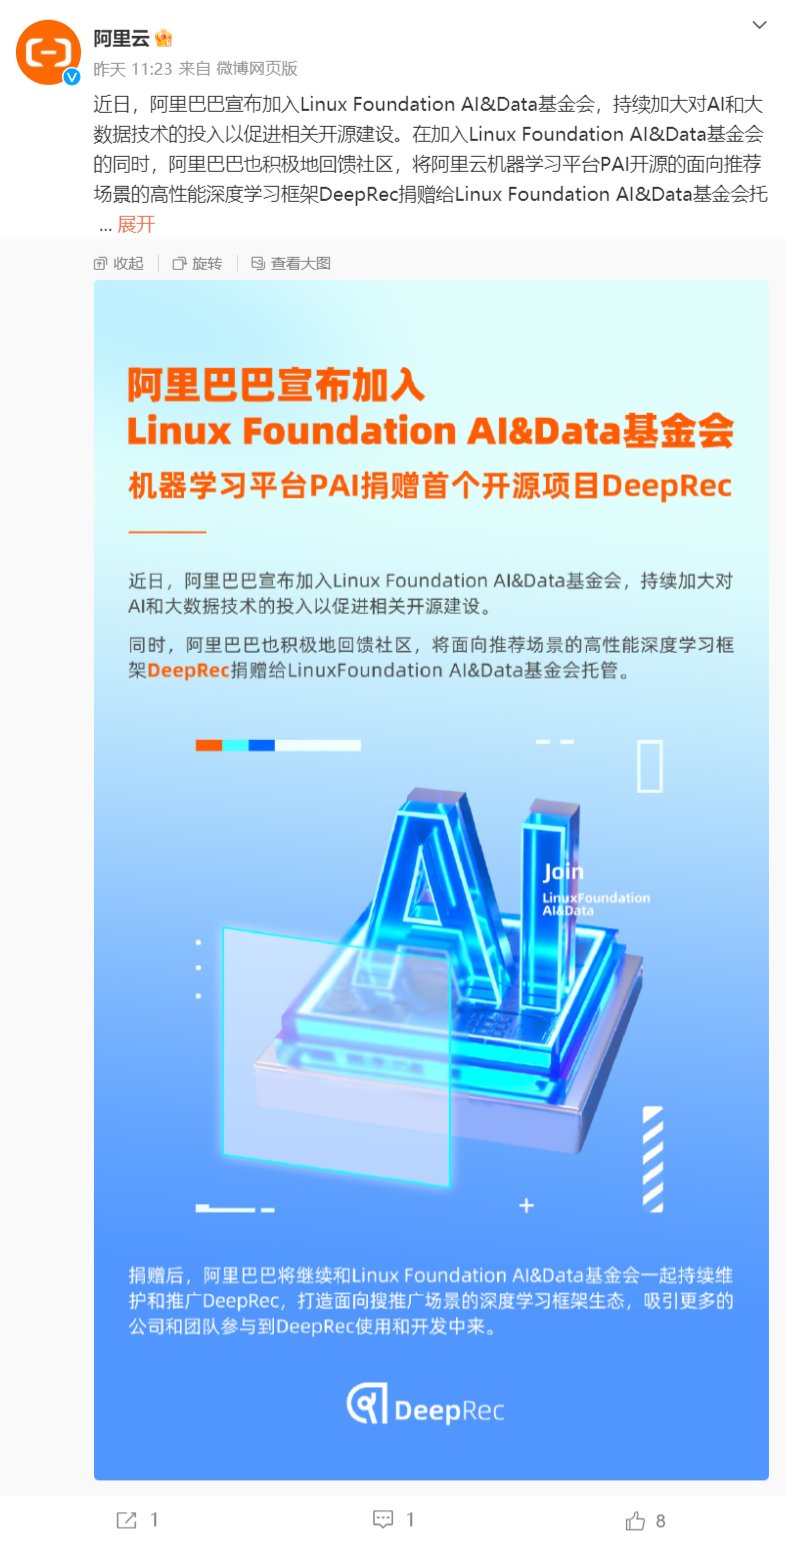 阿里宣布加入Linux Foundation AI&Data基金会